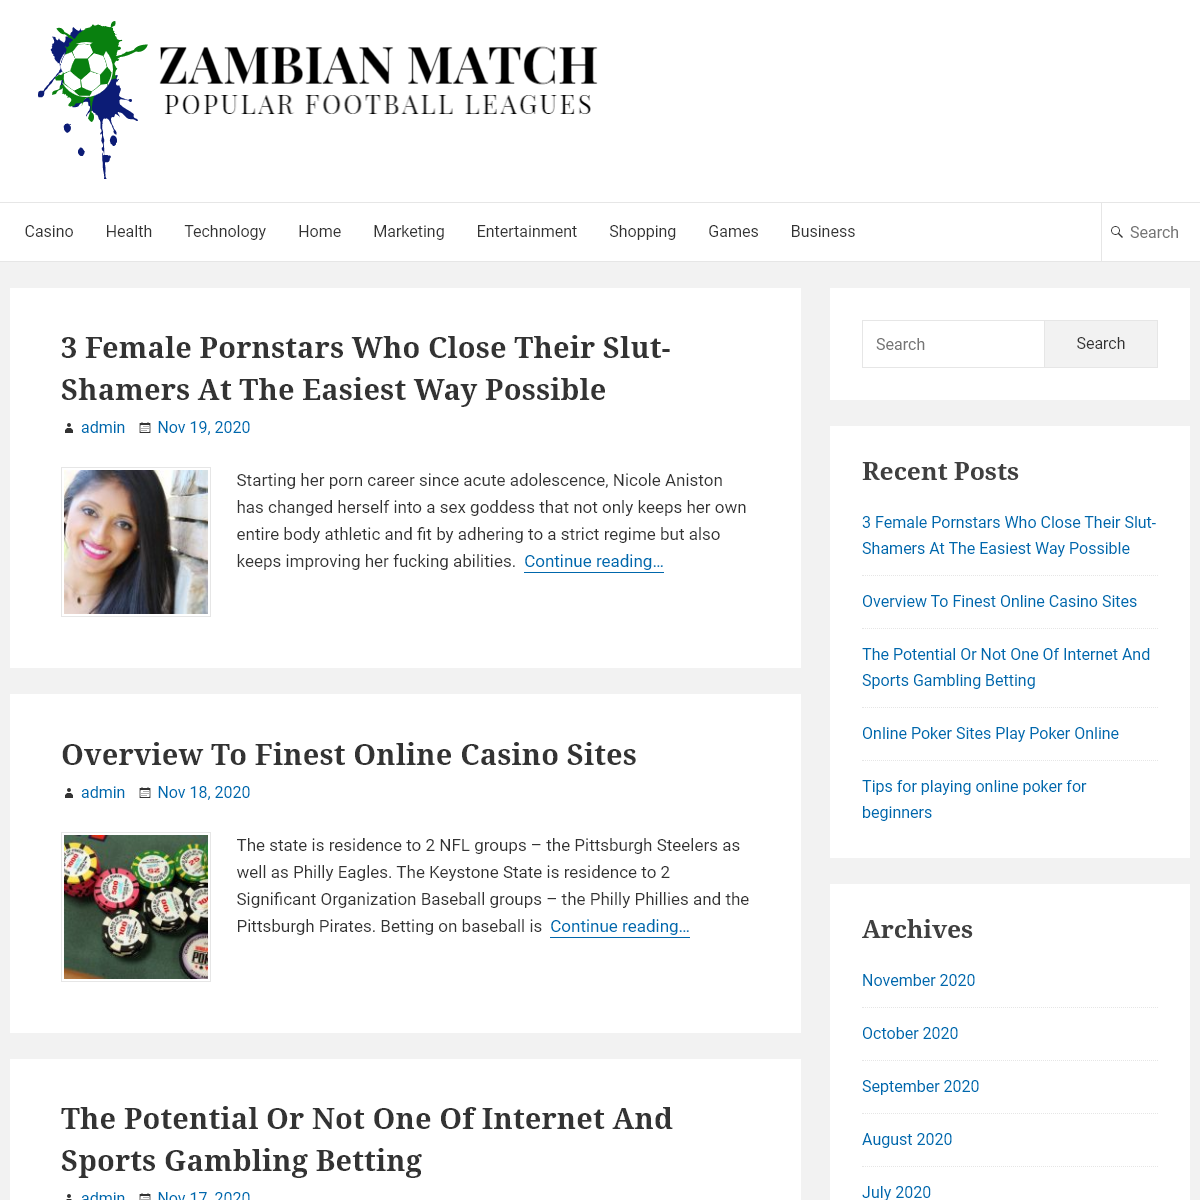 A complete backup of zambianmatch.com